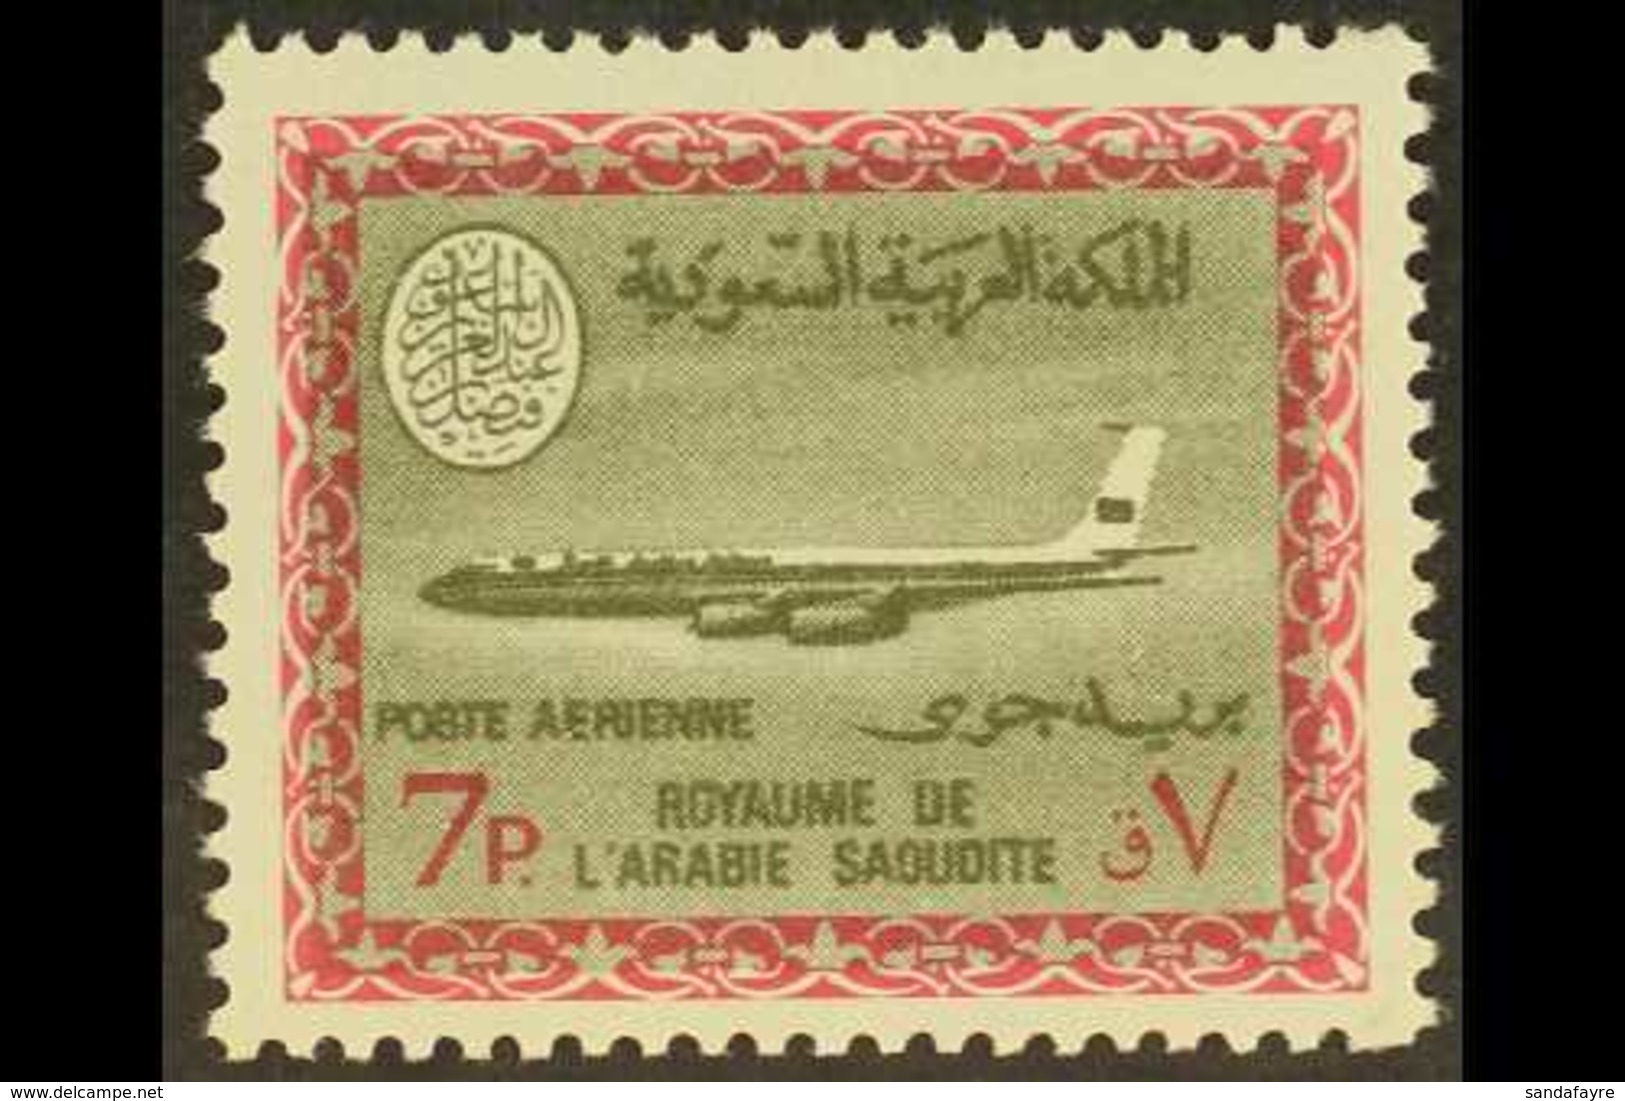 1966-75  7p Bronze-green & Light Magenta Air Aircraft, SG 722, Very Fine Never Hinged Mint, Fresh. For More Images, Plea - Saudi-Arabien